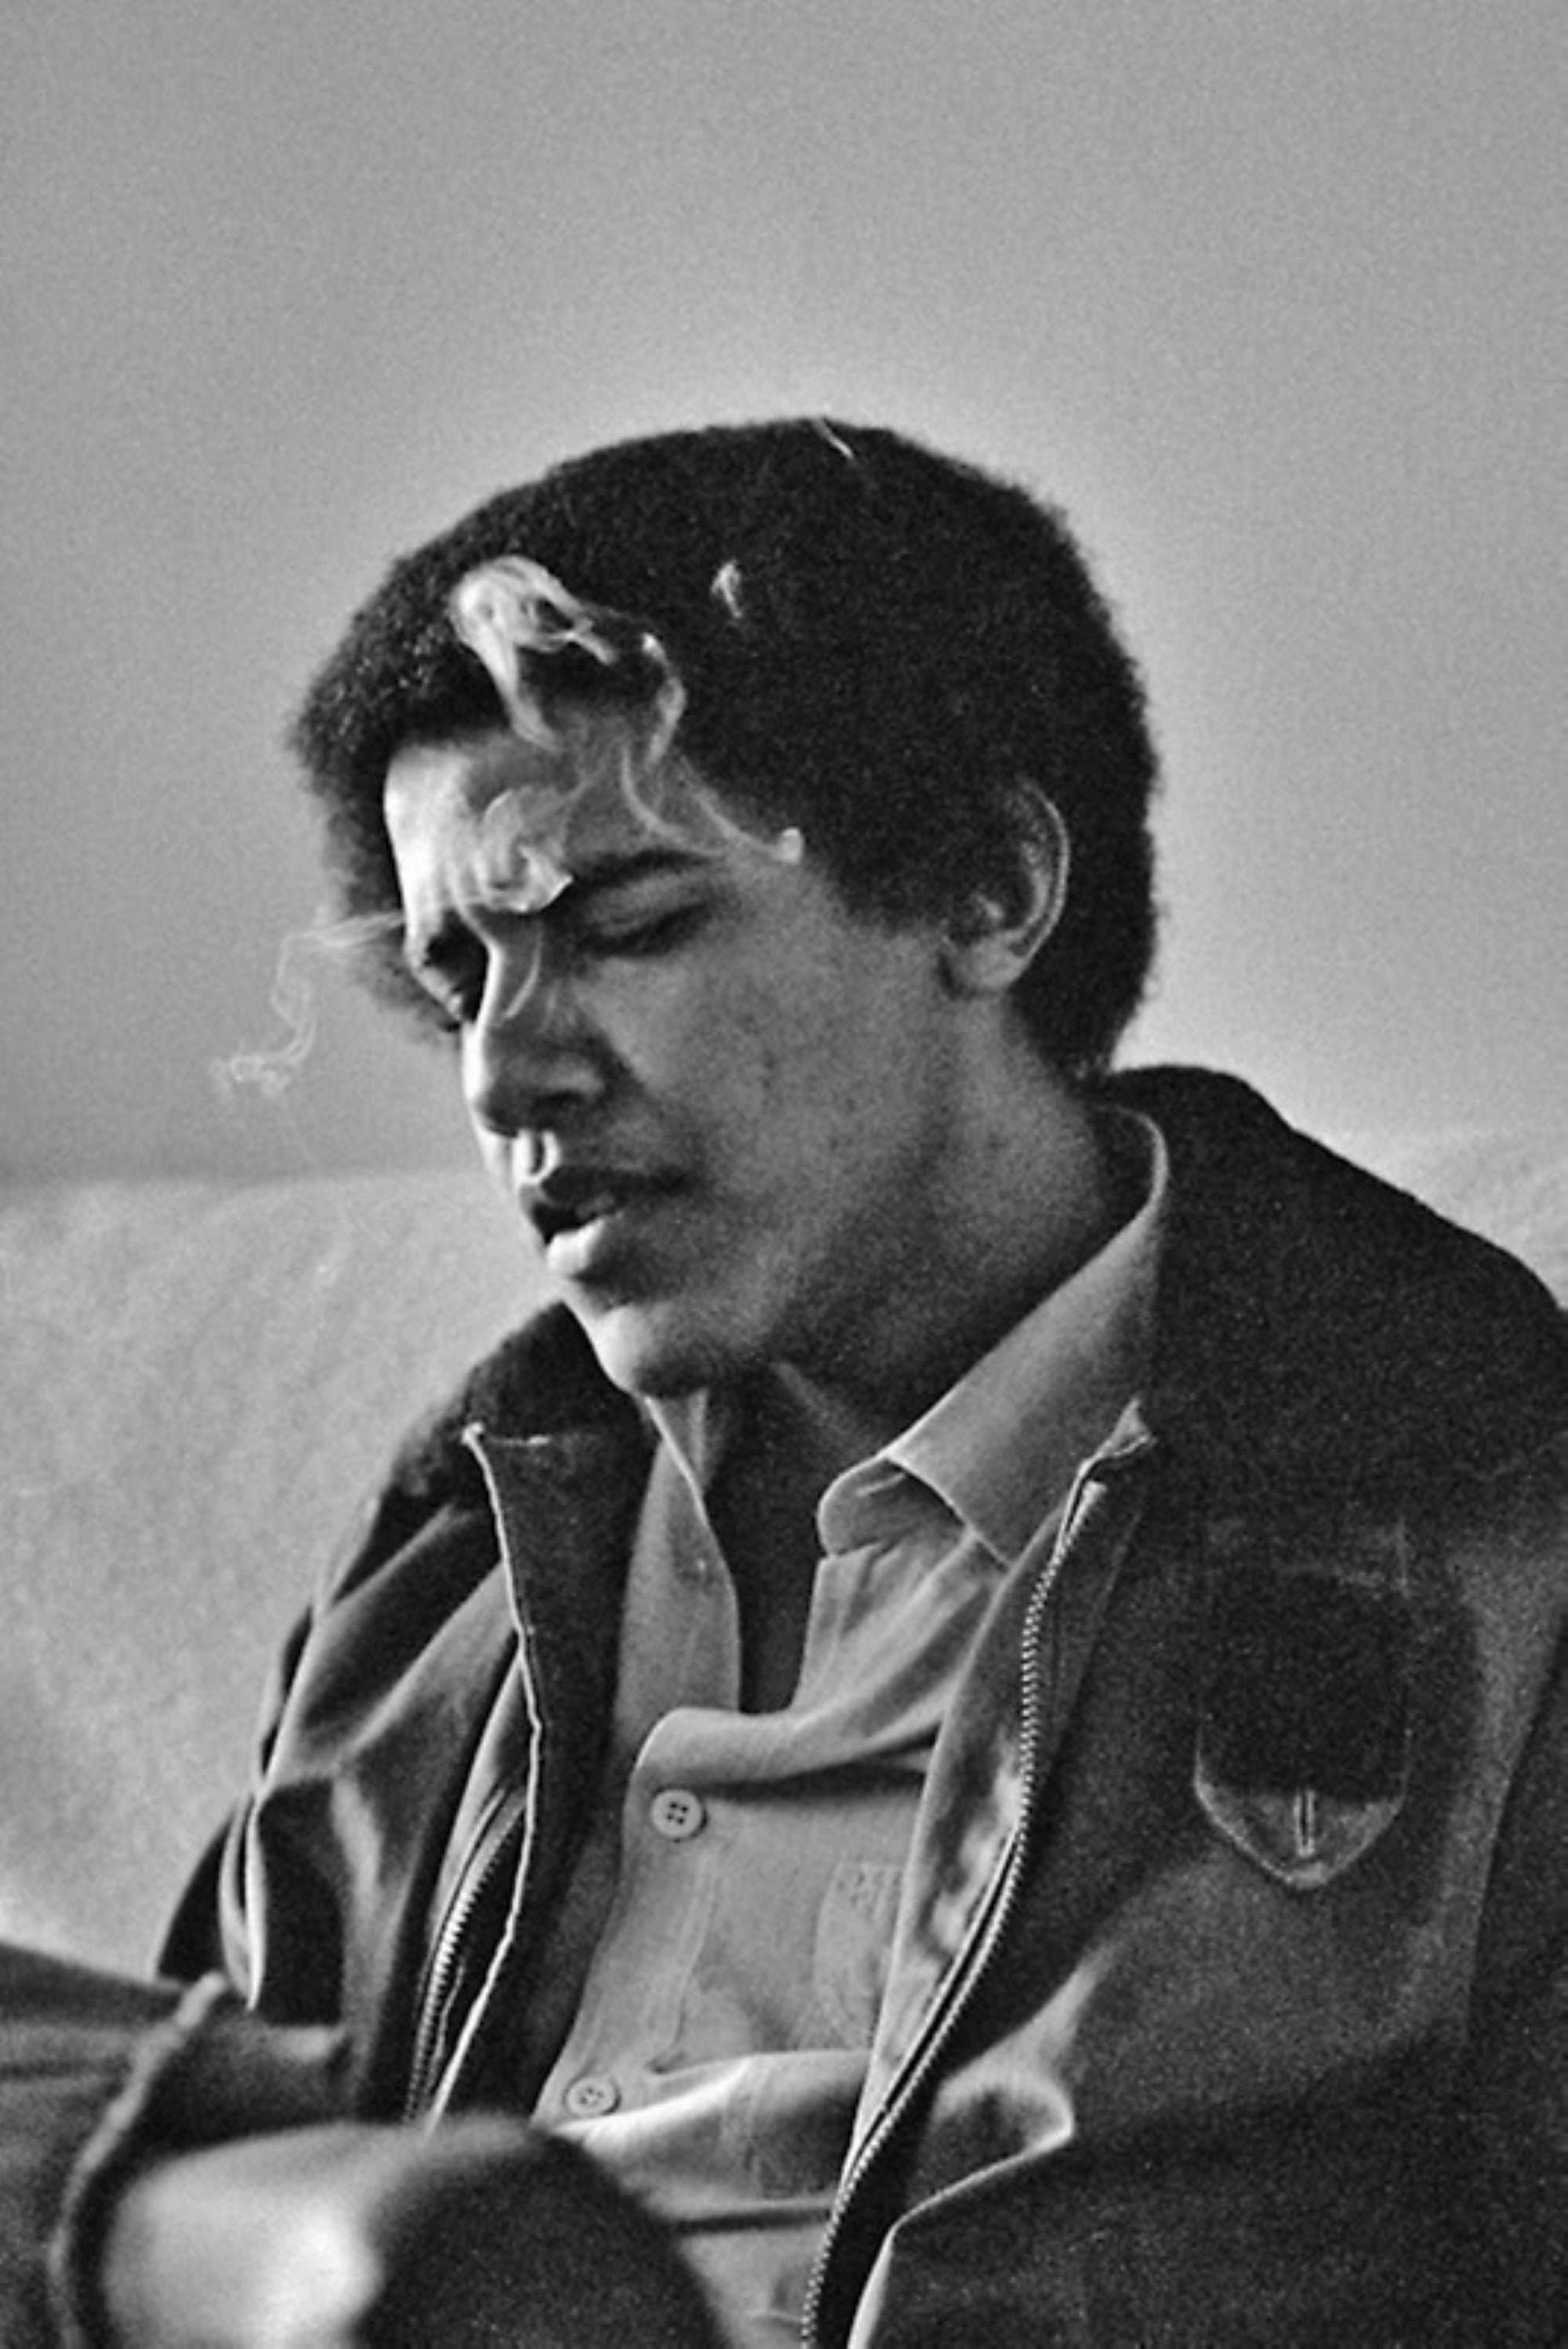 Joven Barack Obama fumando marihuana Póster impreso - Etsy España